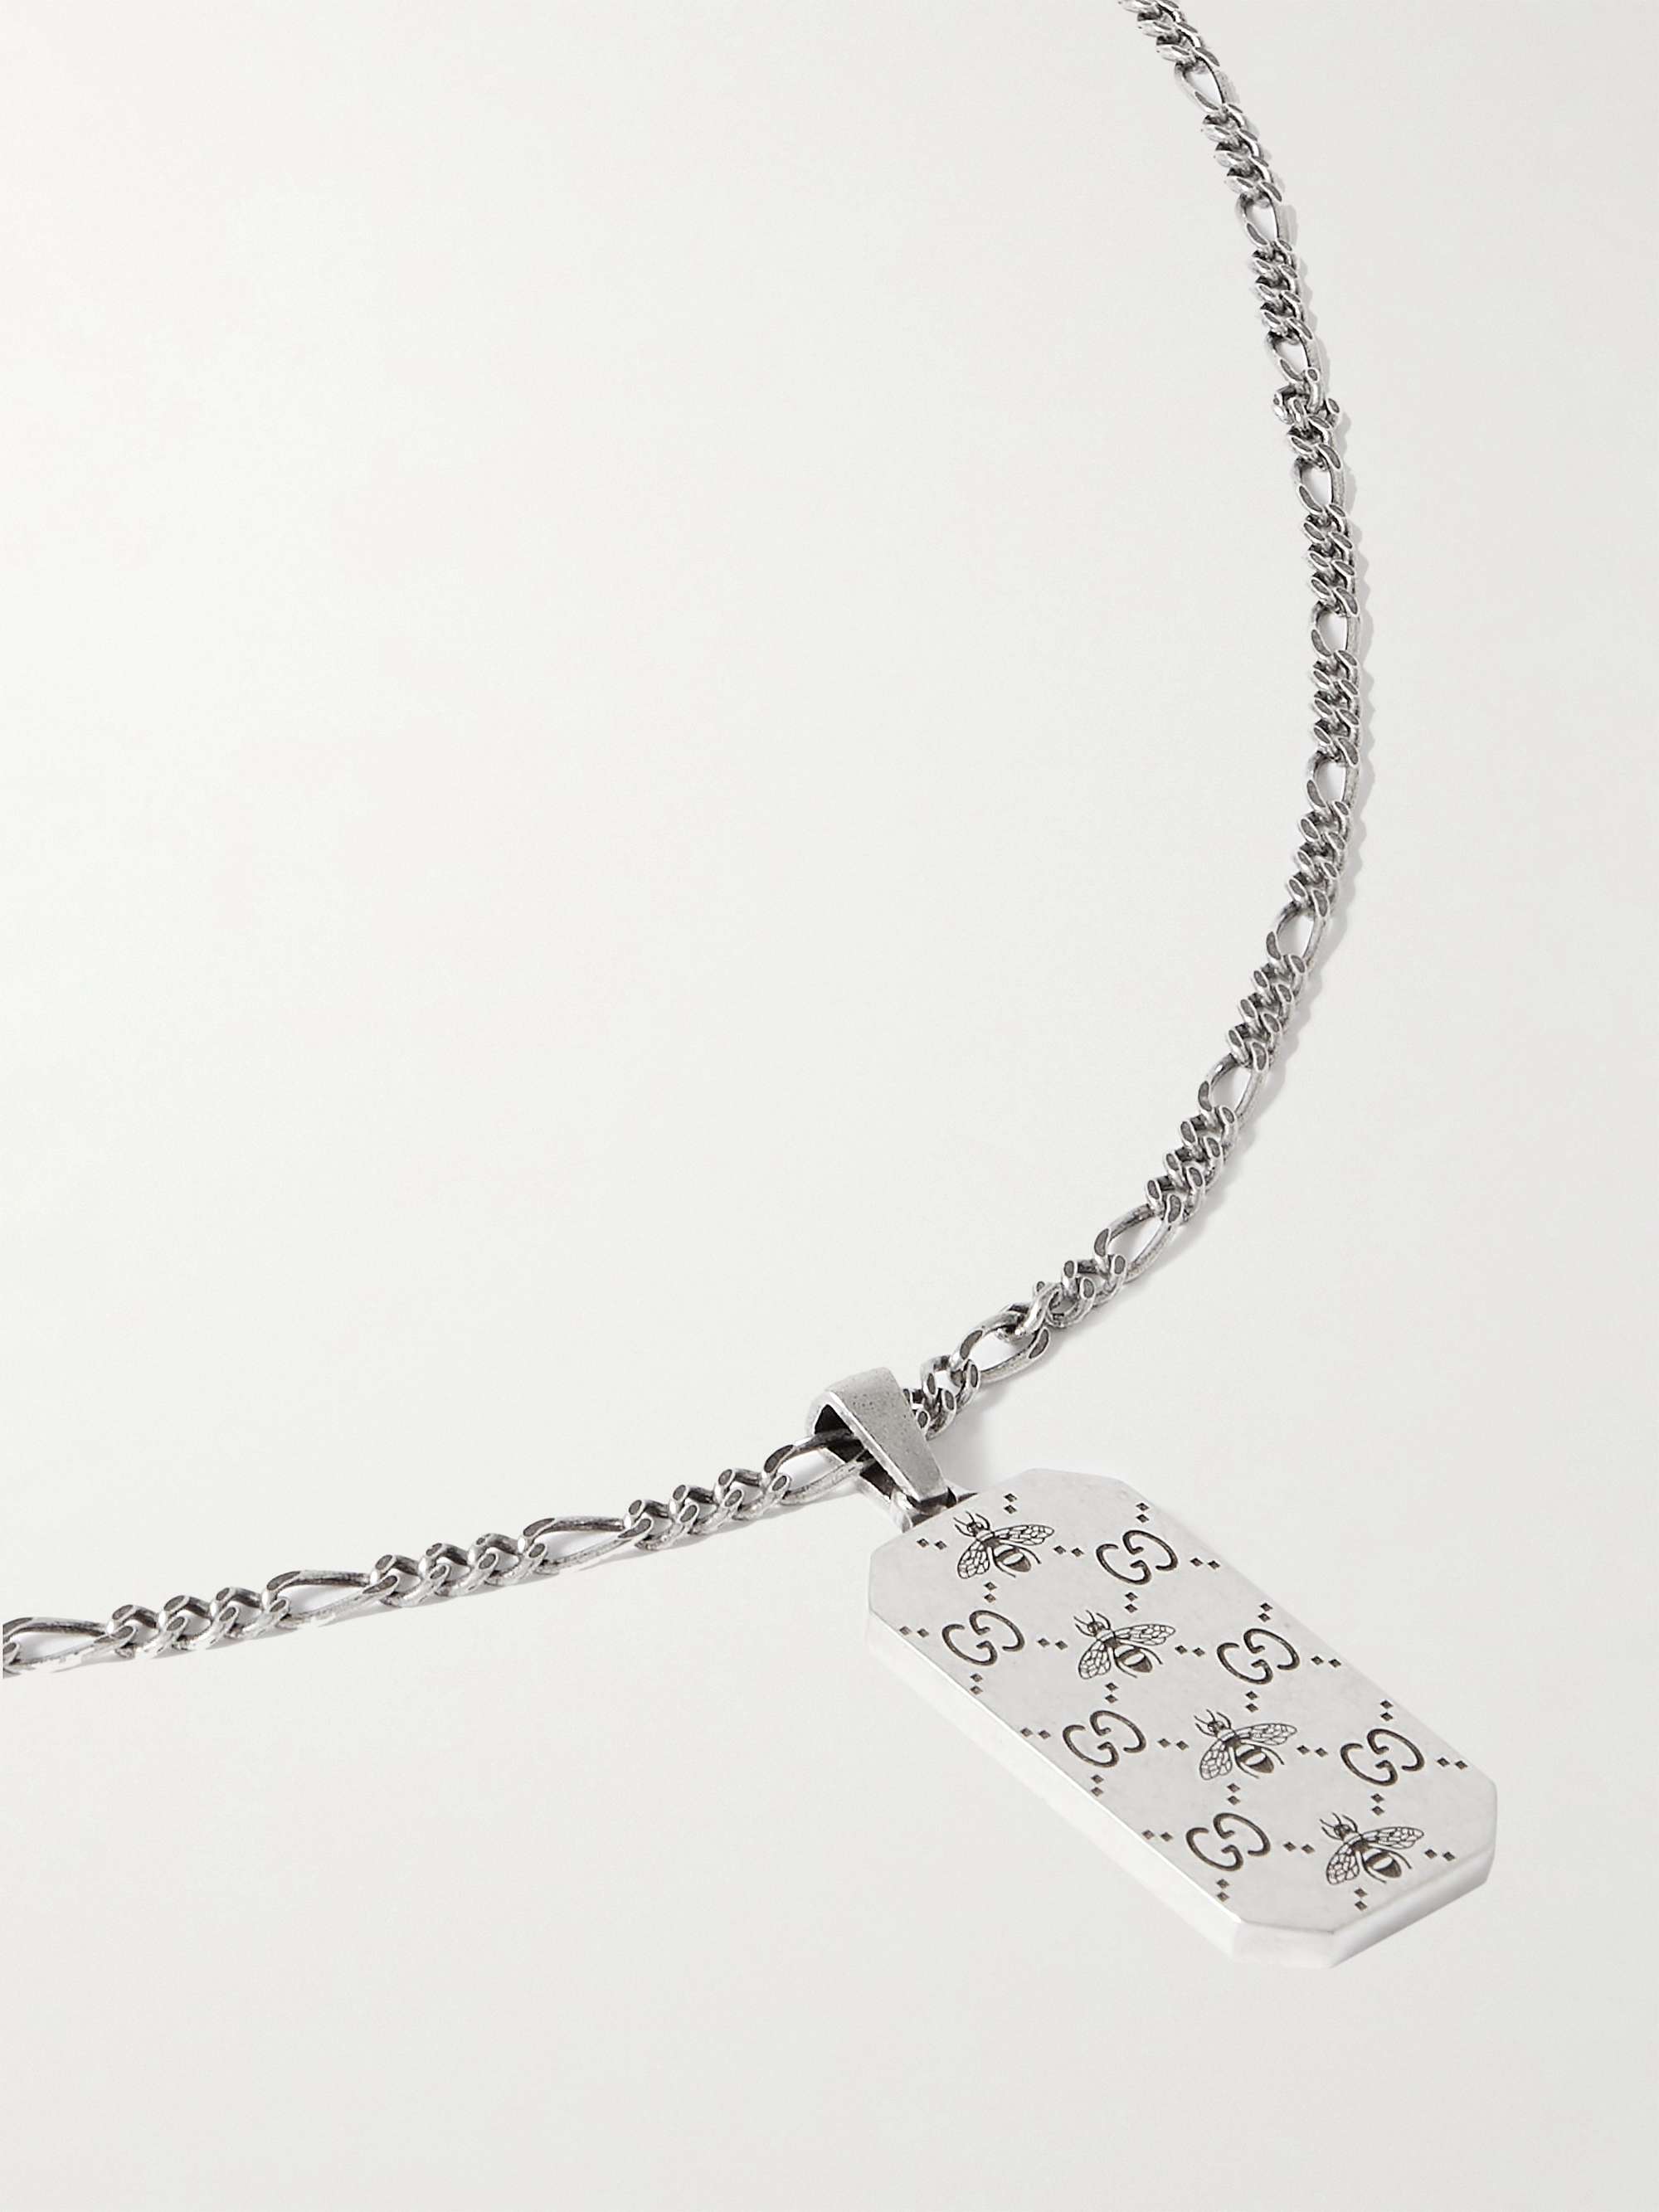 GUCCI Engraved Silver Pendant Necklace | MR PORTER